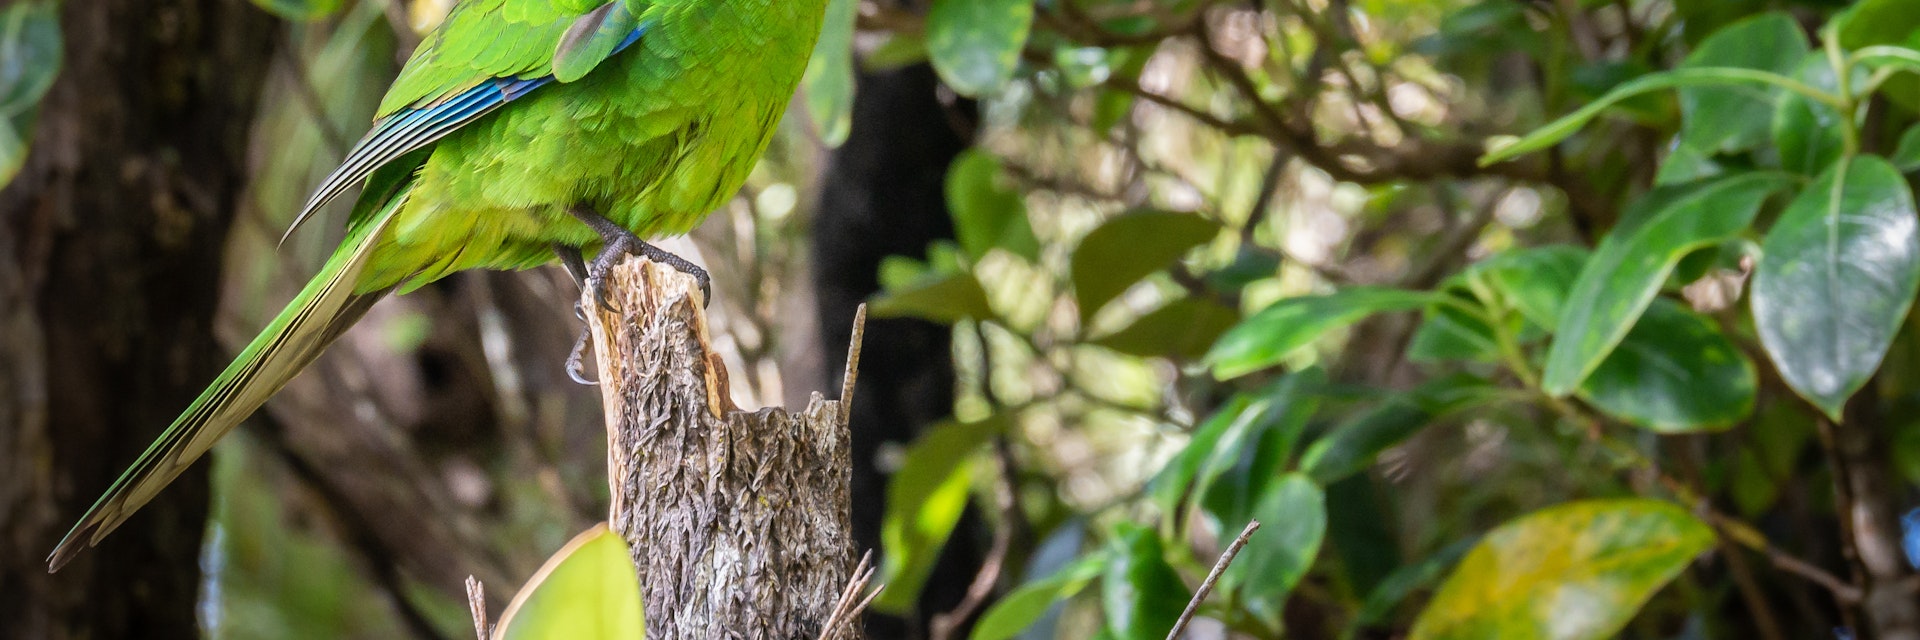 Parrot on Ulva Island, New Zealand.